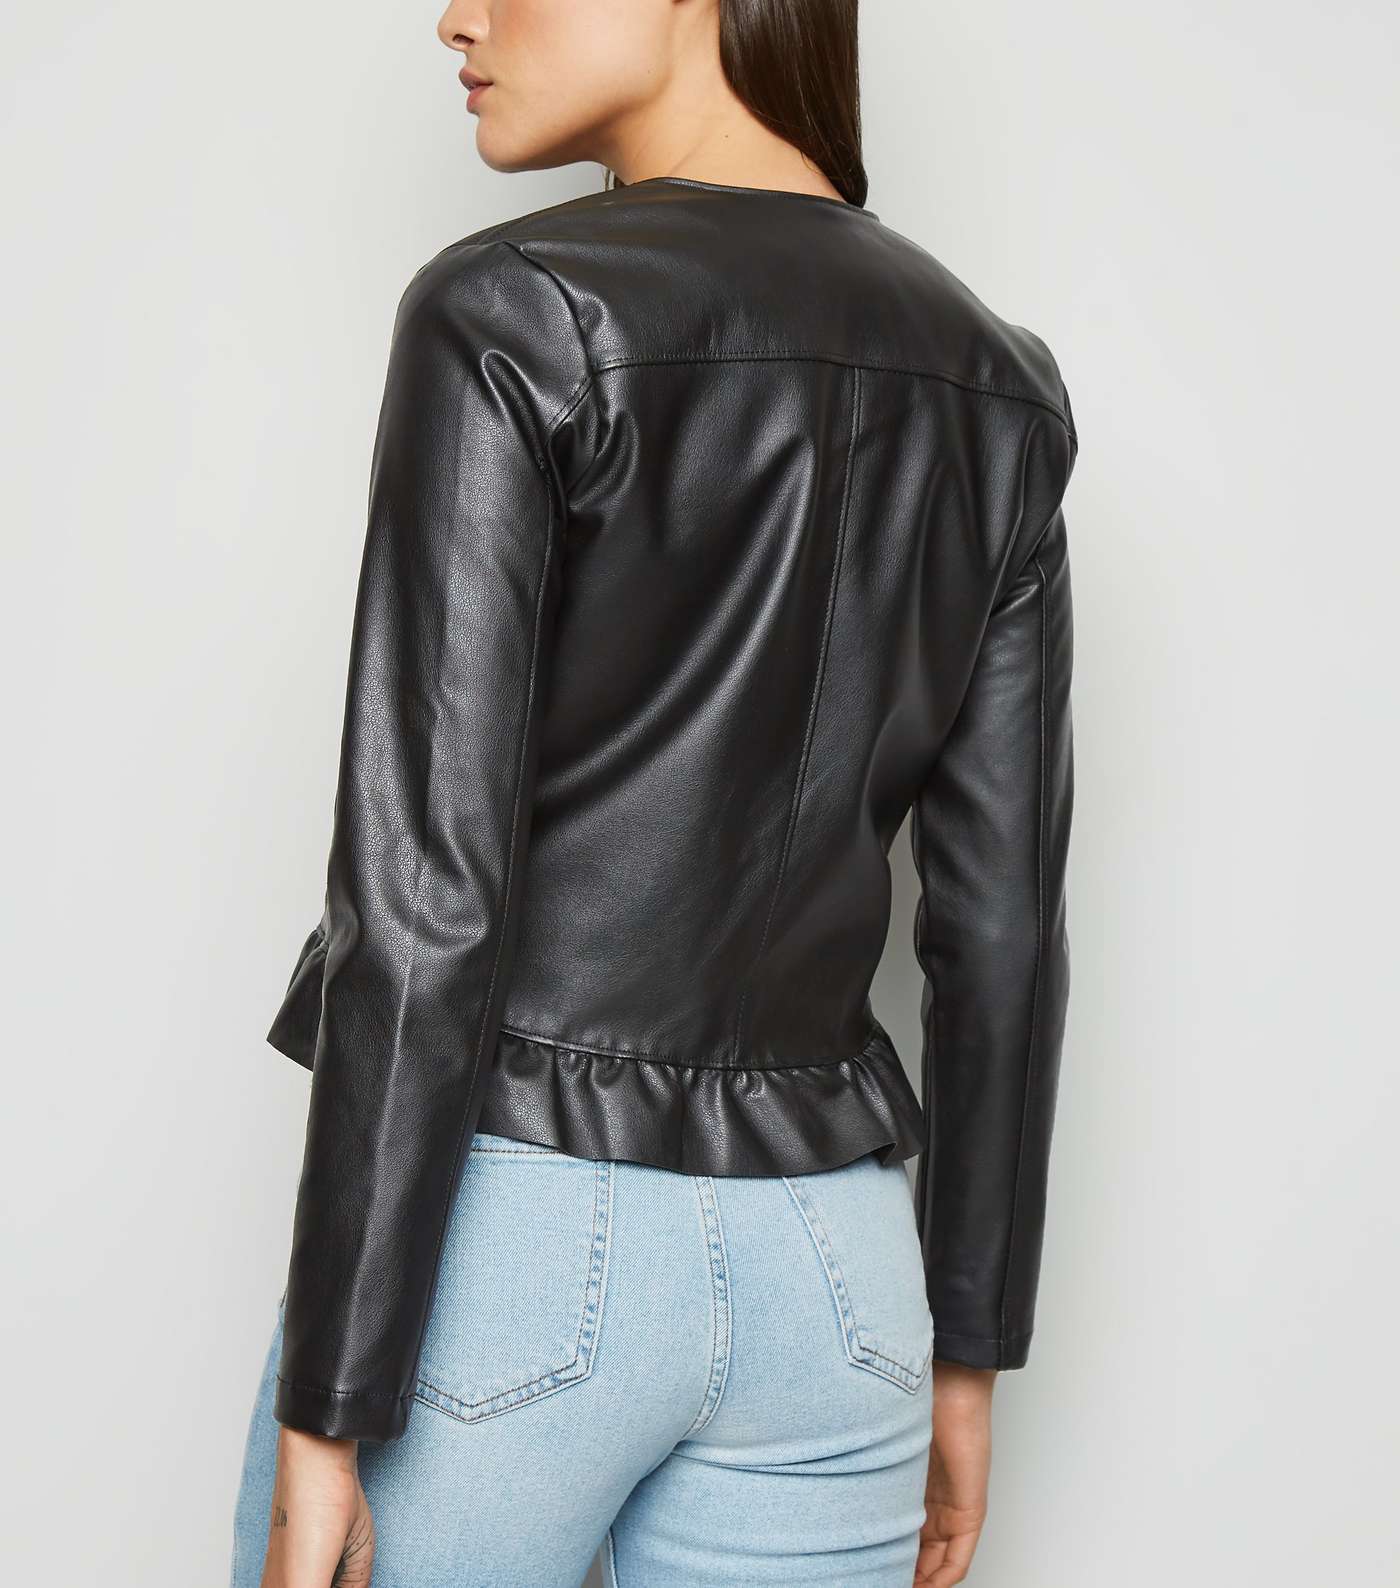 Urban Bliss Black Leather-Look Peplum Jacket Image 3